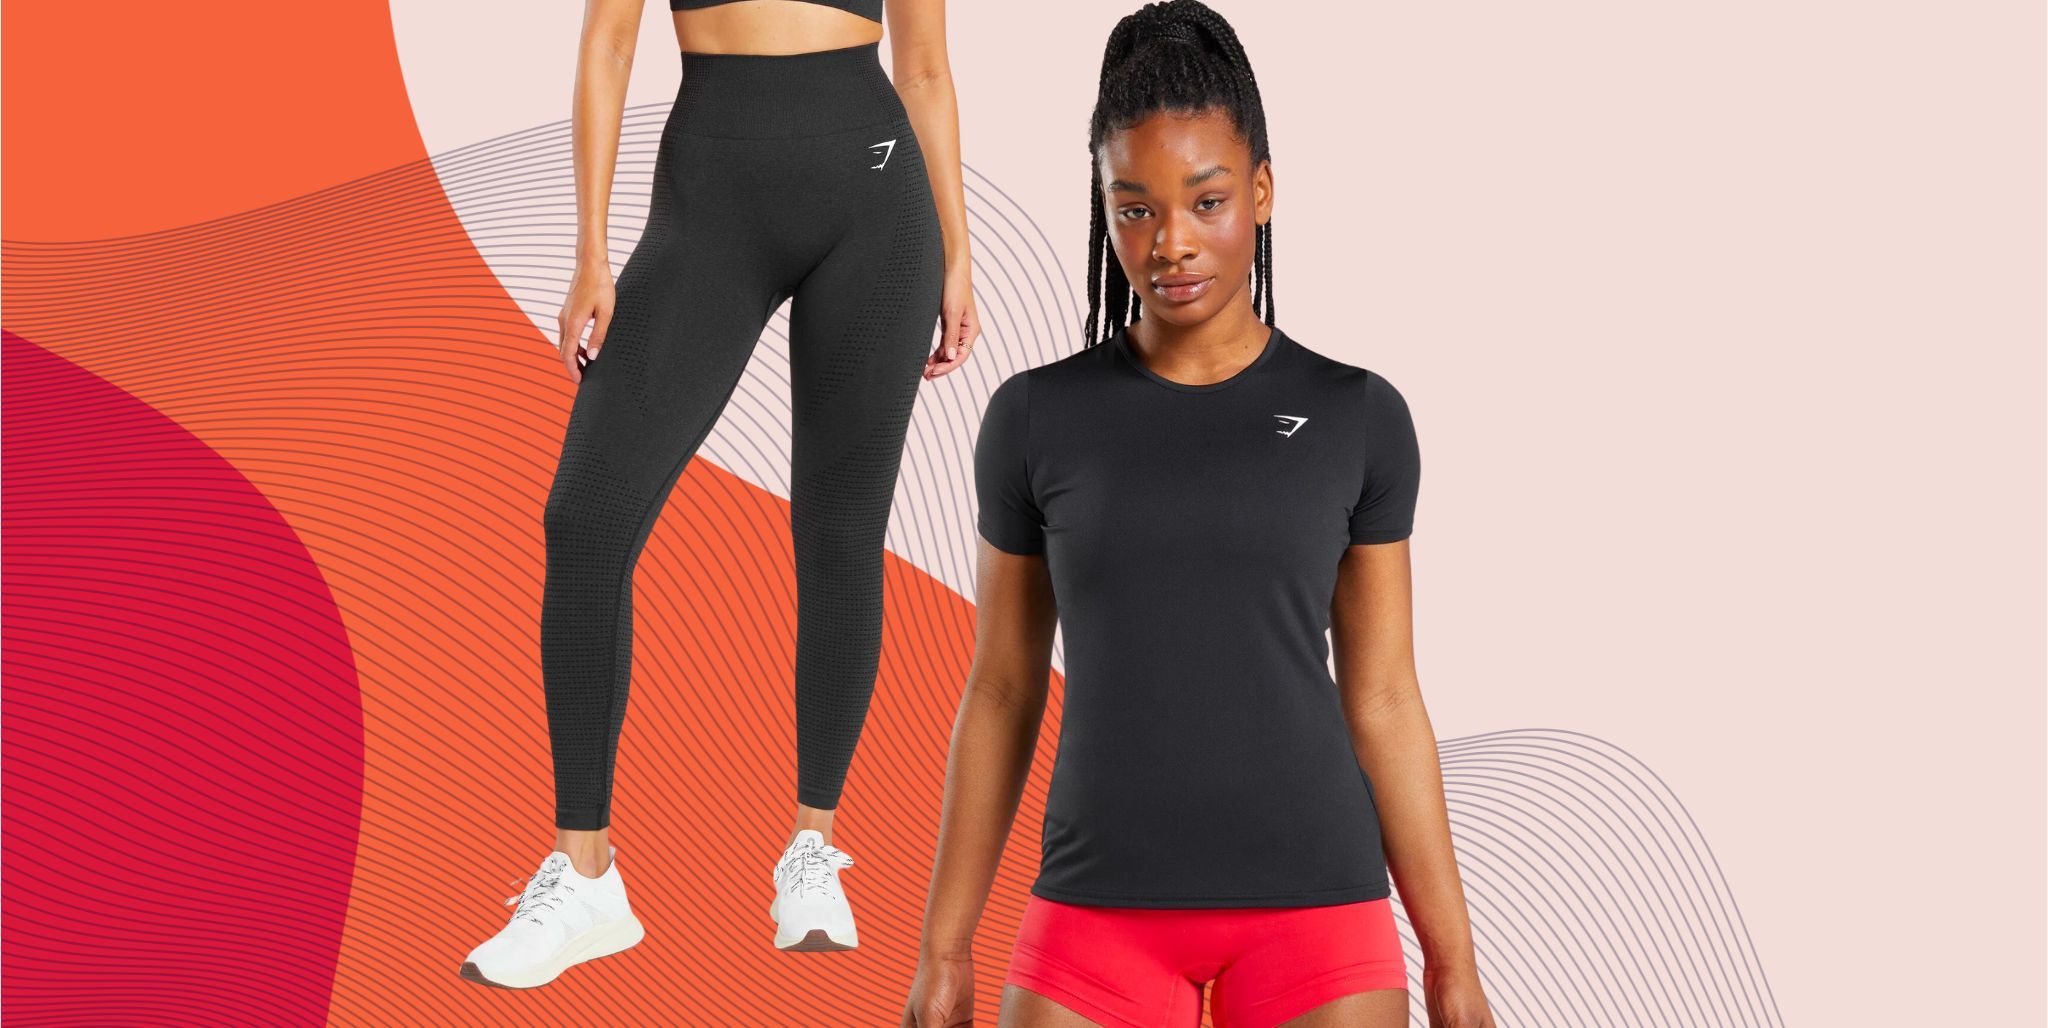 Burgandy Athletic Wear Workout Set 2 Pieces Legging and top – PeachFit  Sportswear